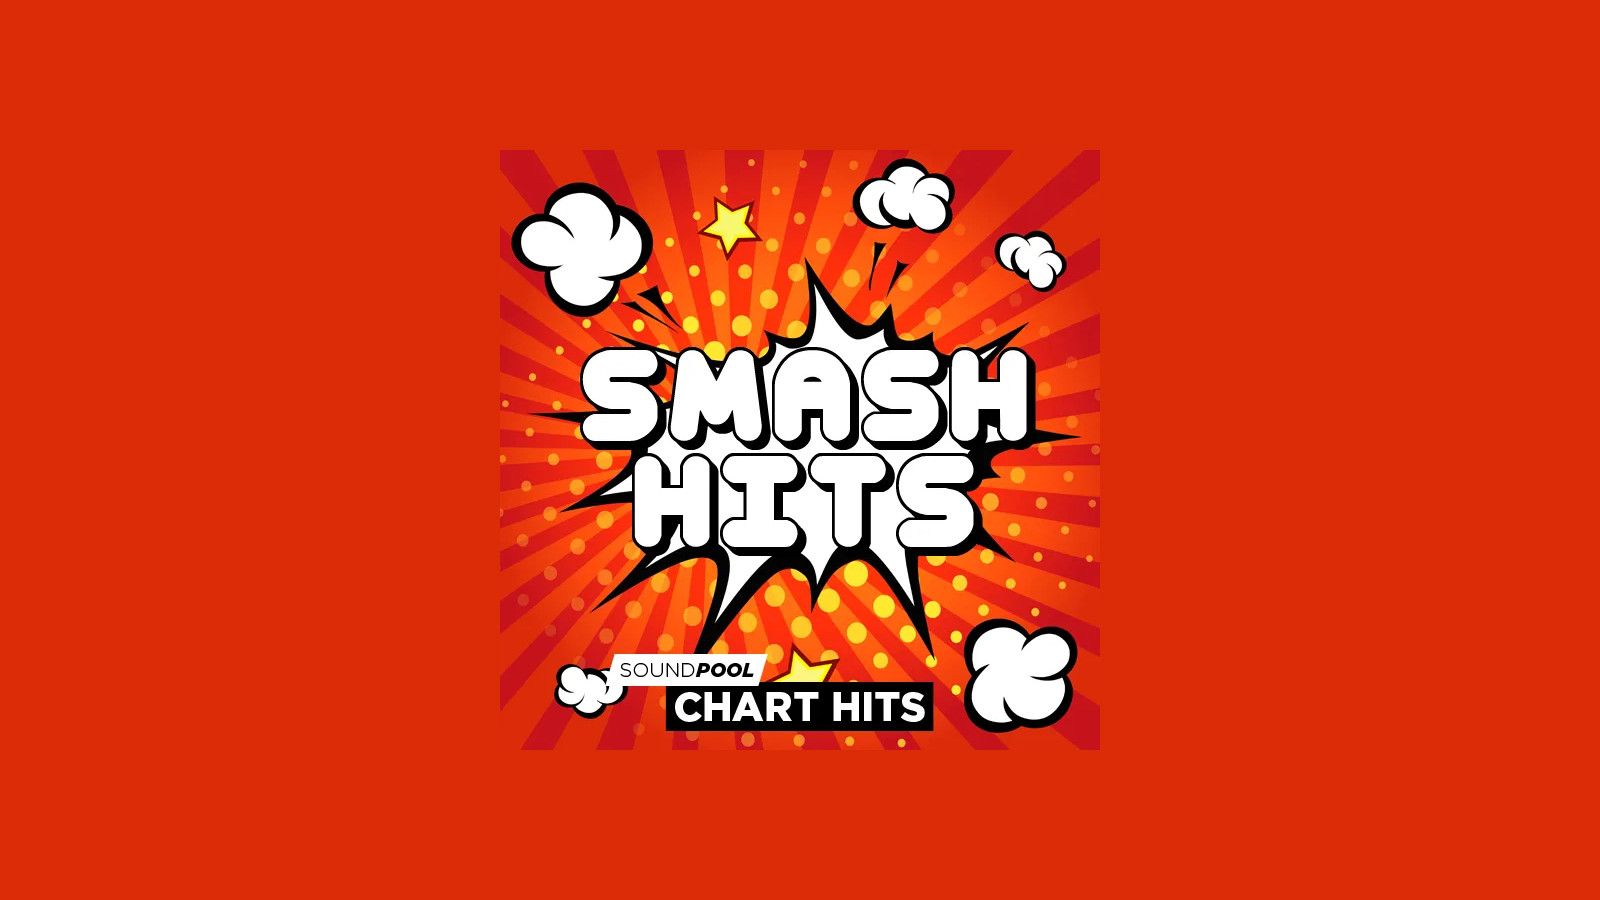 MAGIX Soundpool Smash Hits ProducerPlanet CD Key $5.65